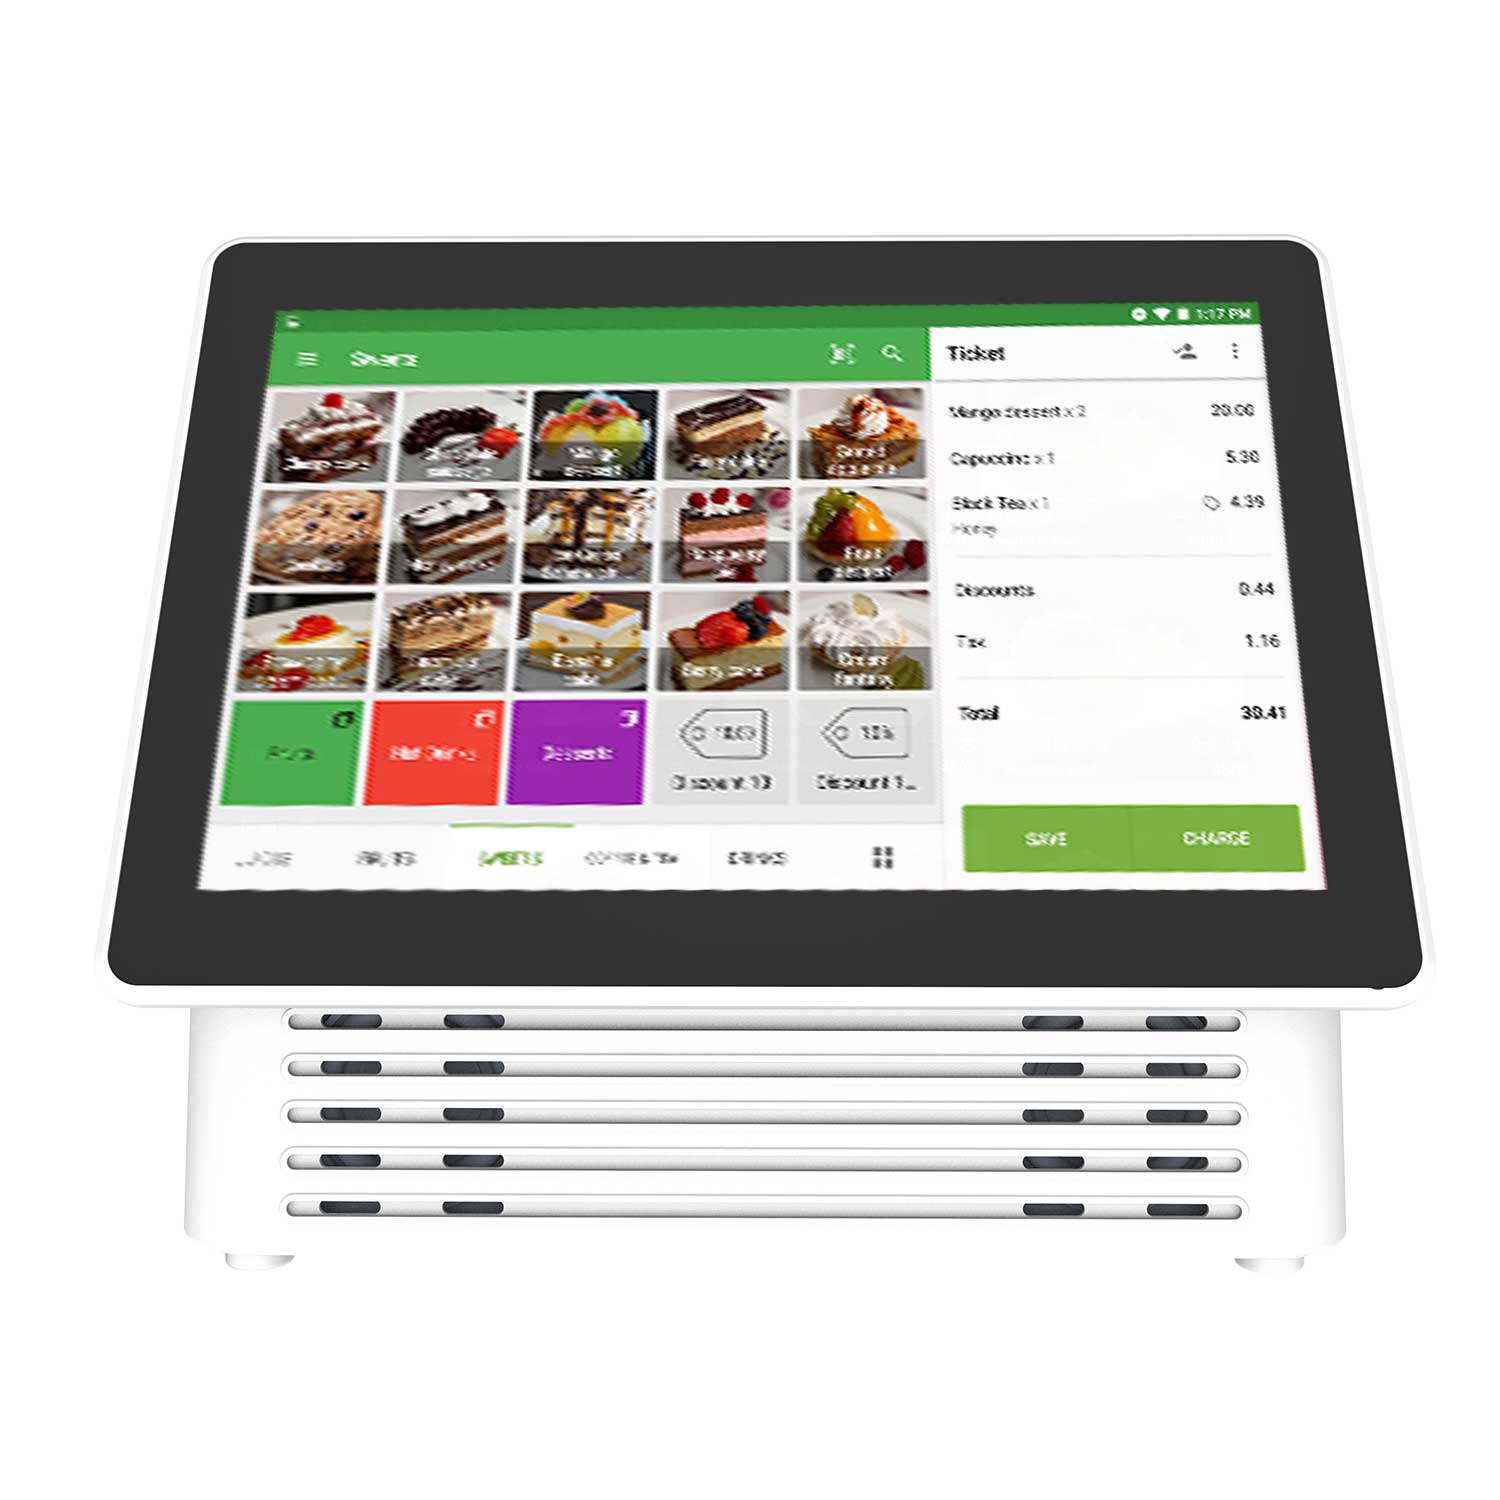 RestoTab Tablet with Receipt printer | Simbans RestoTab 8 Inch Tablet with Built-in thermal printer